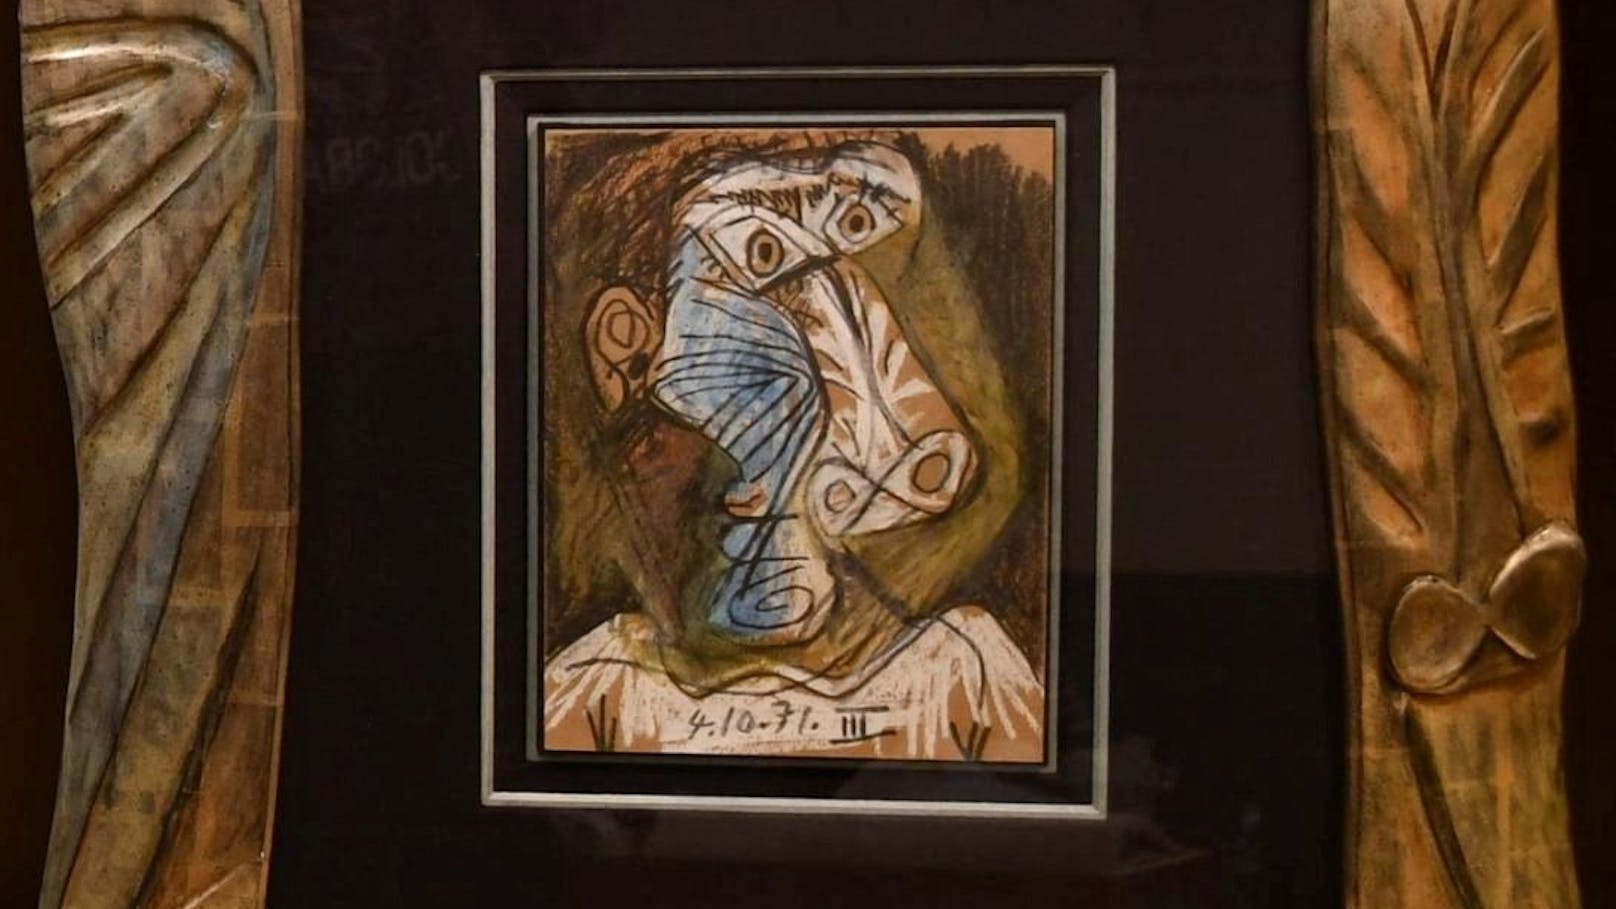 Picasso-Gemälde in belgischem Keller gefunden